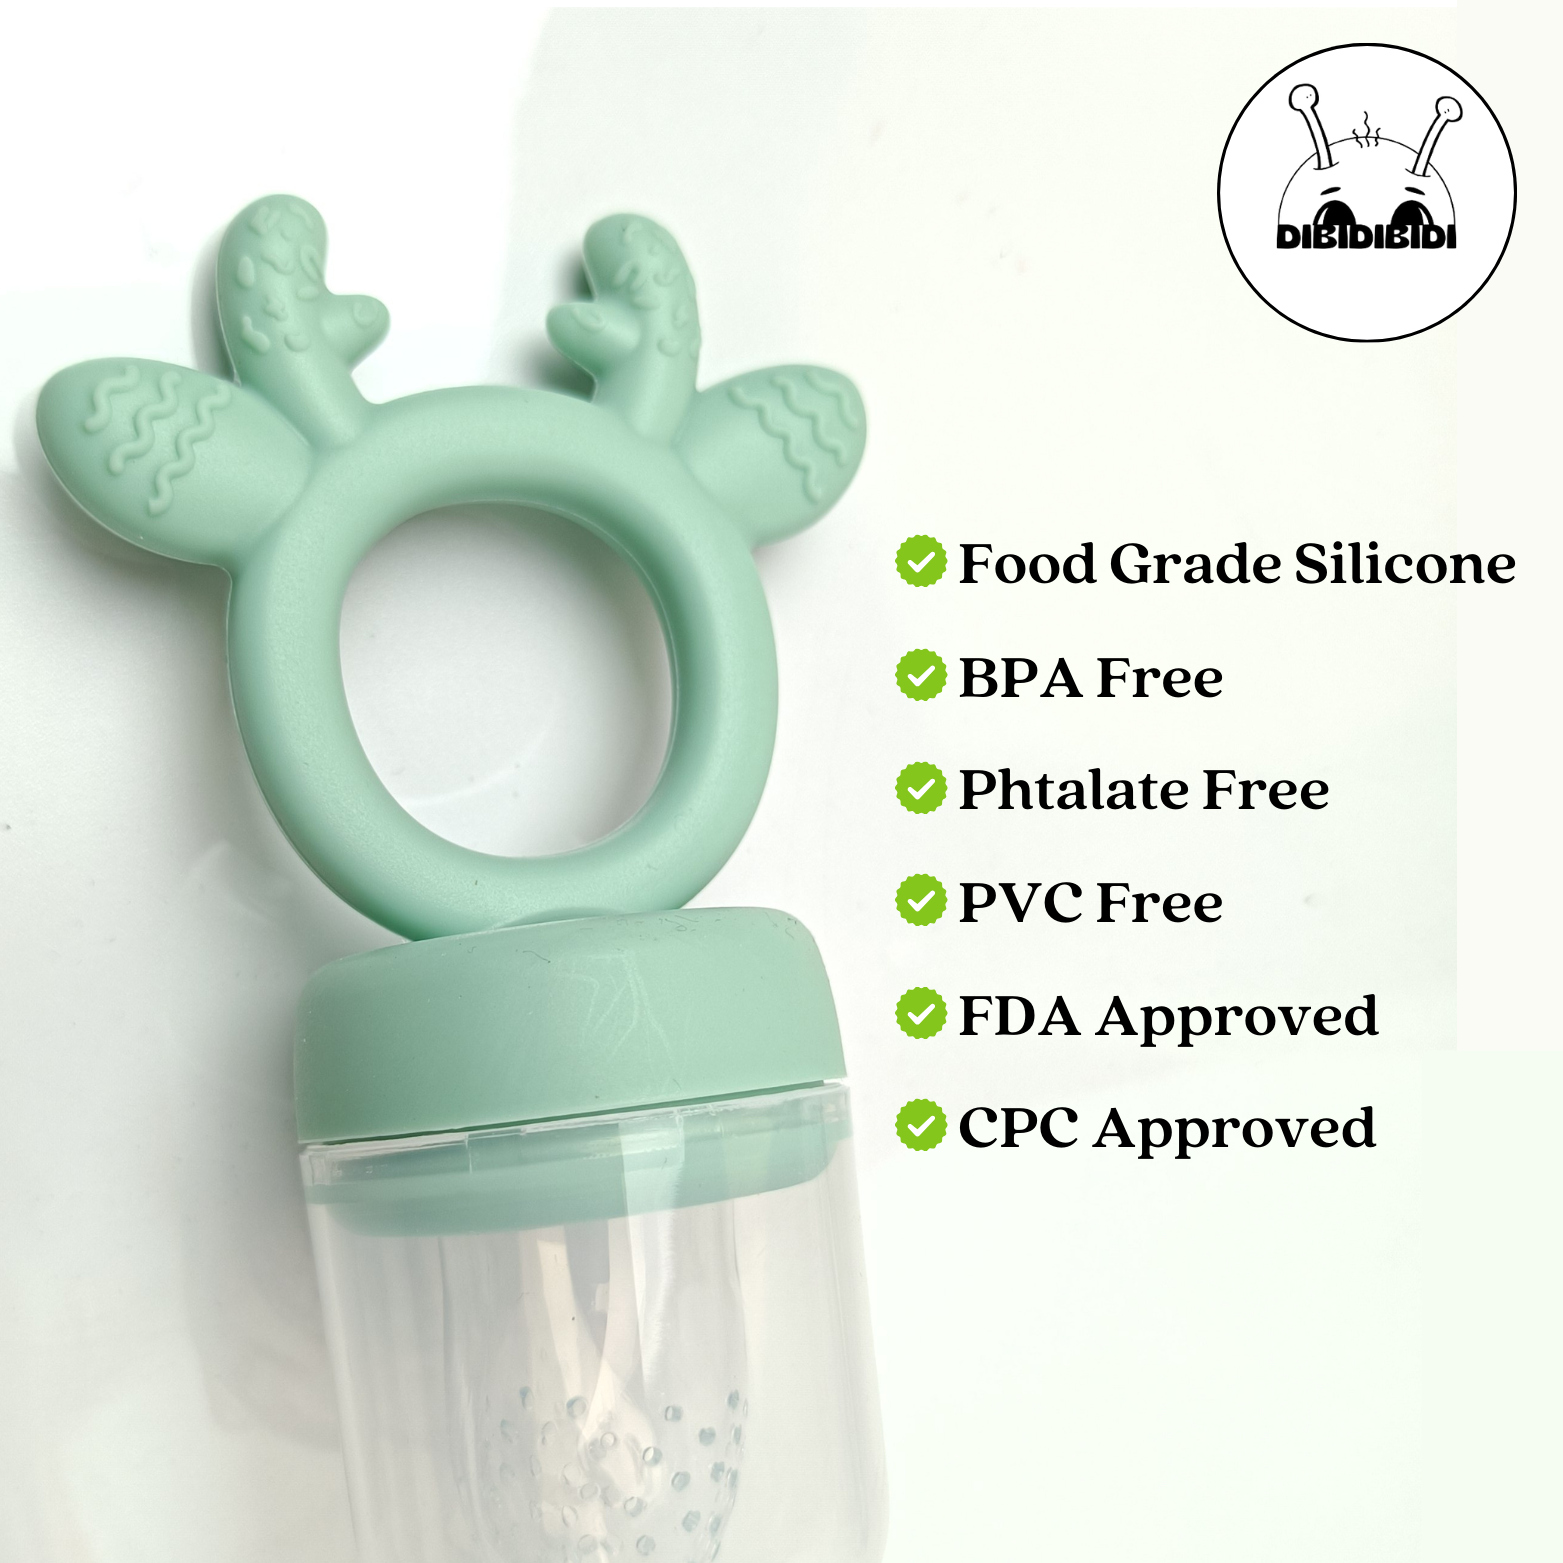 Dibidibidi 10 Pieces Baby Feeding Supplies Set - Soft Silicone